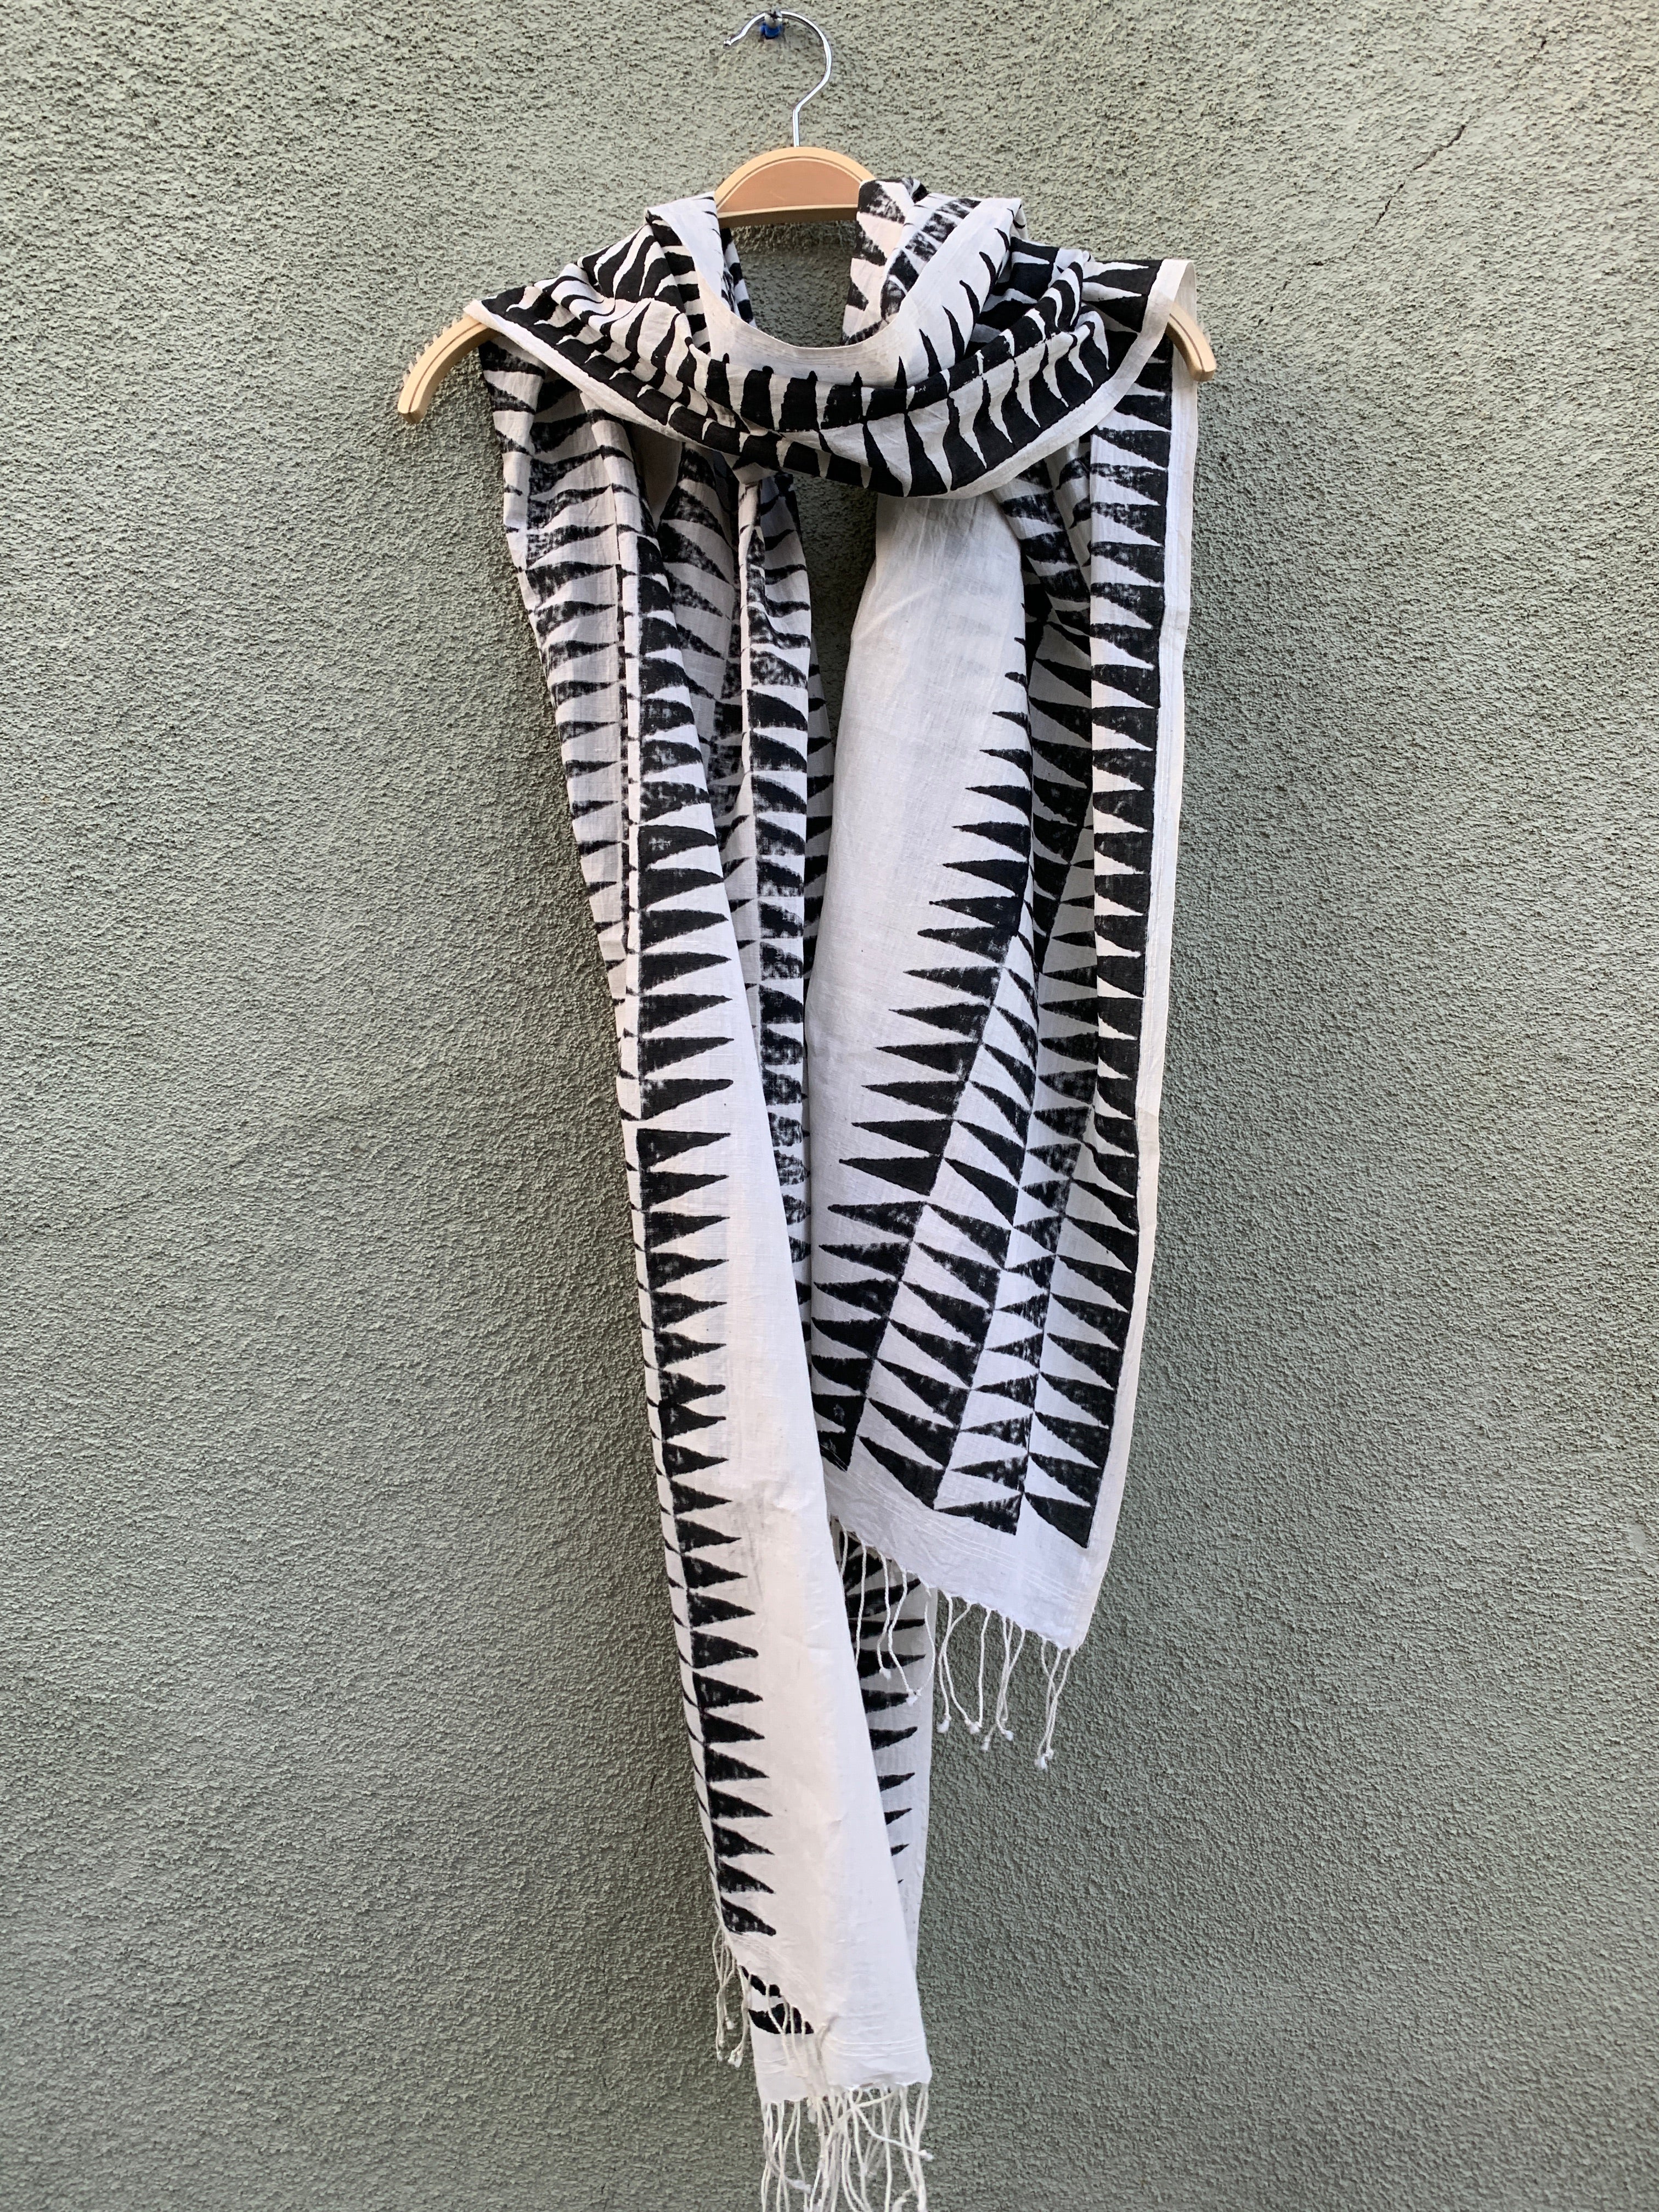 glorka scarf